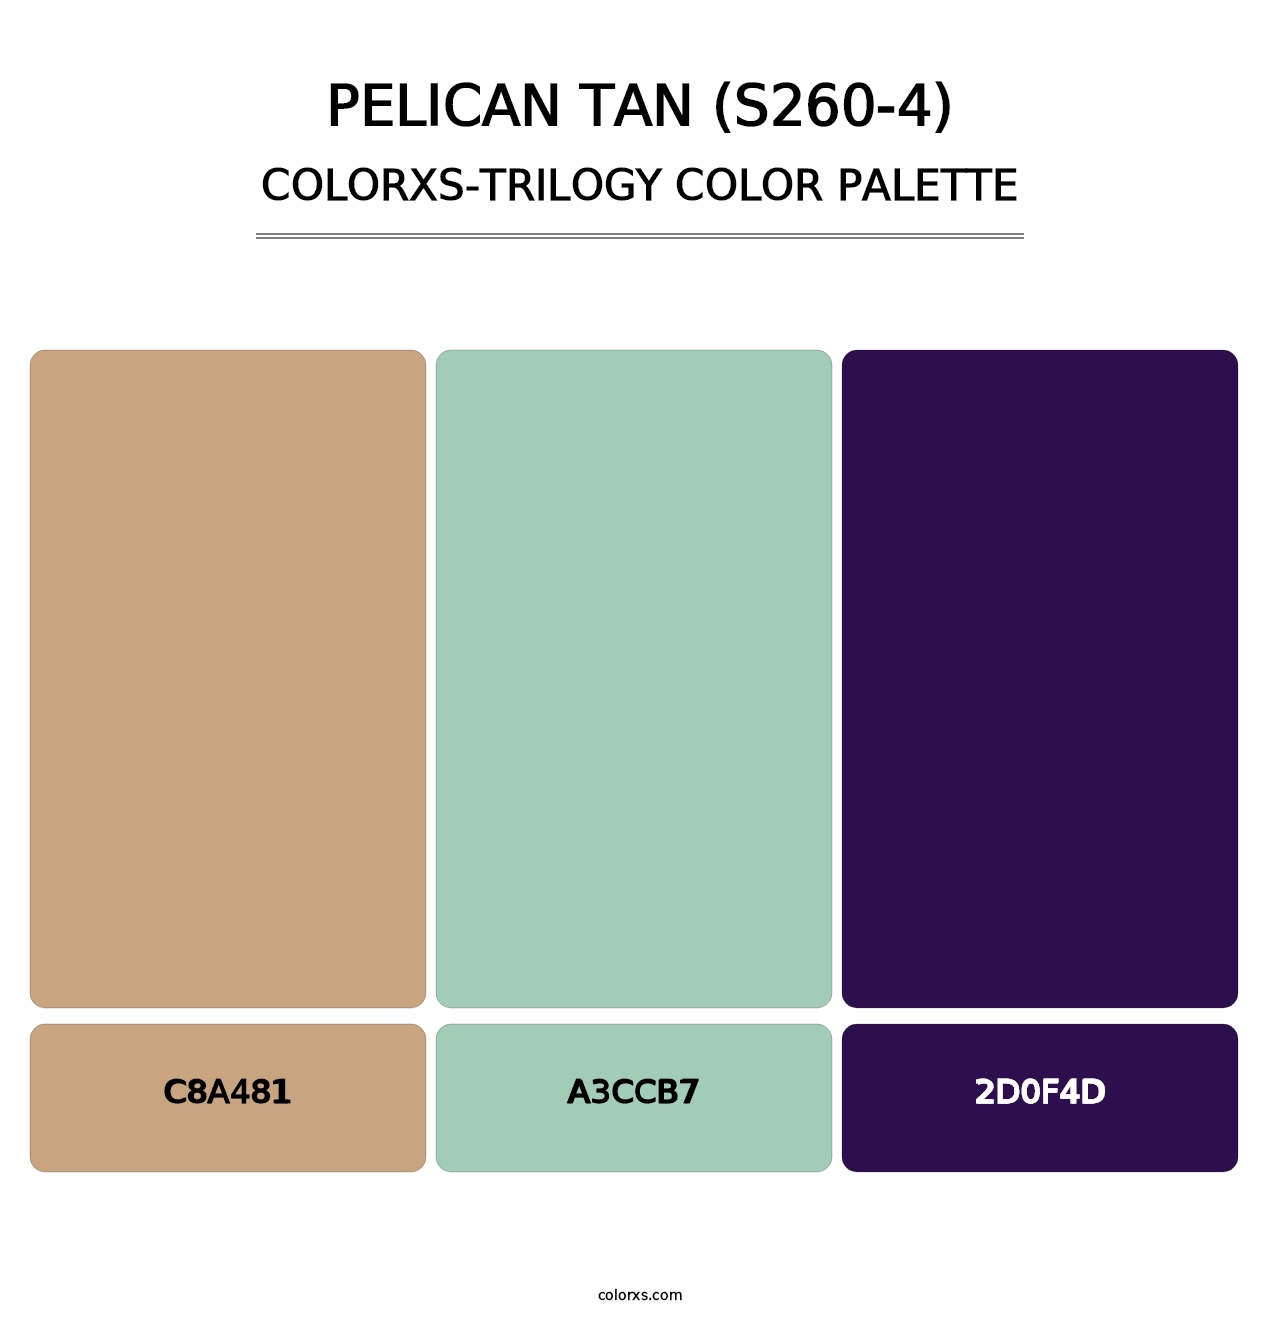 Pelican Tan (S260-4) - Colorxs Trilogy Palette